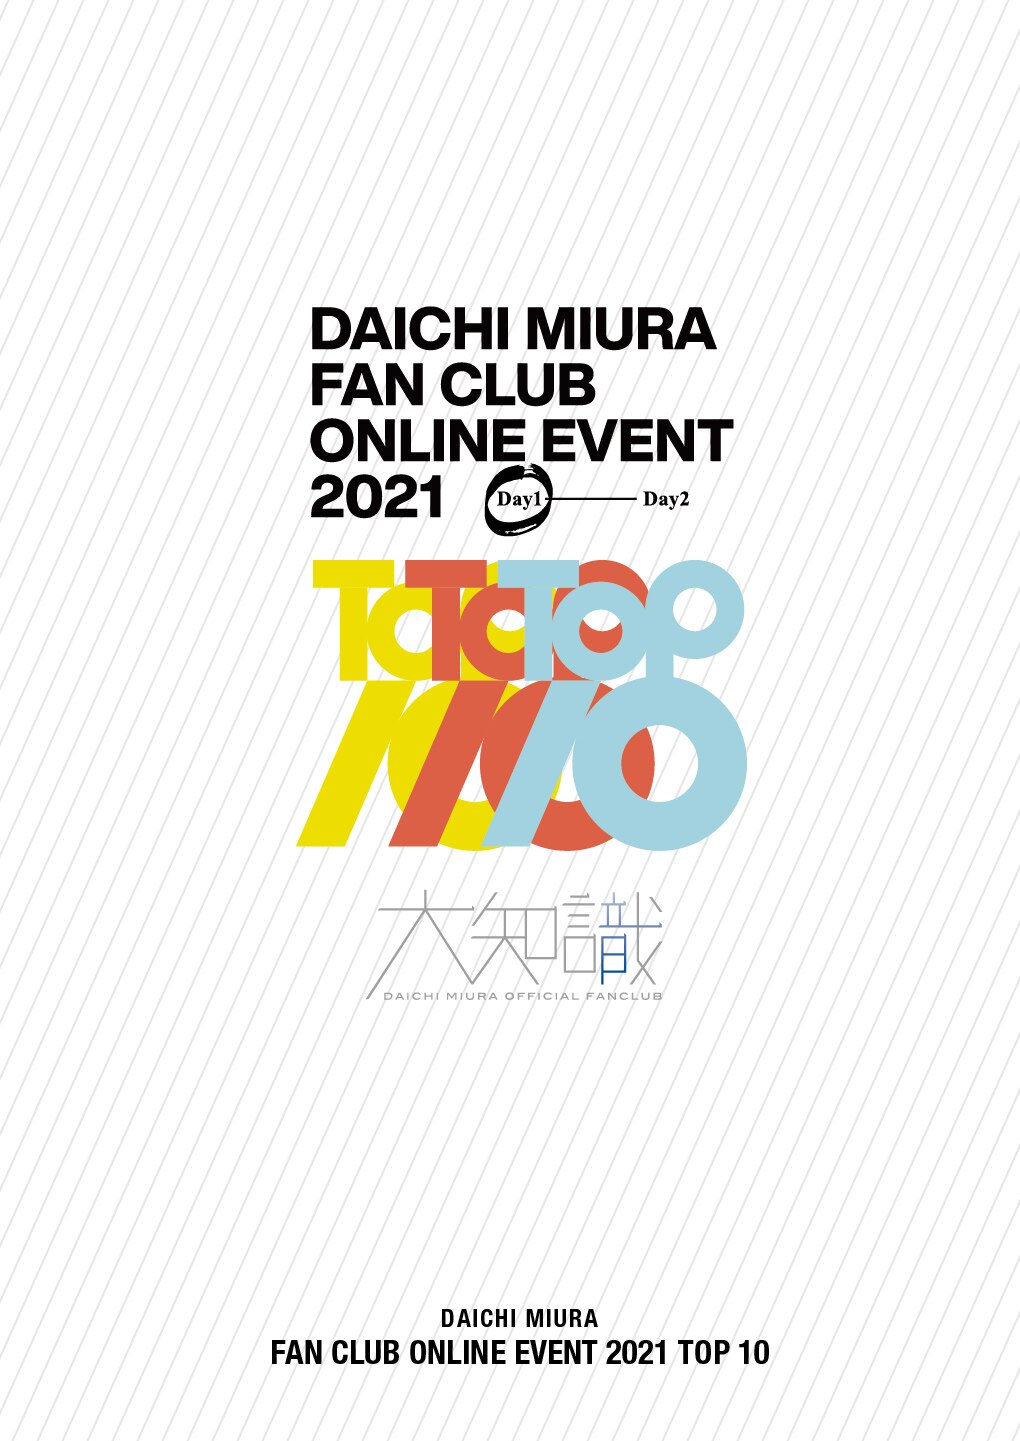 【FC大知識会員限定】「DAICHI MIURA FAN CLUB ONLINE EVENT 2021 TOP 10」追加グッズ・受注限定